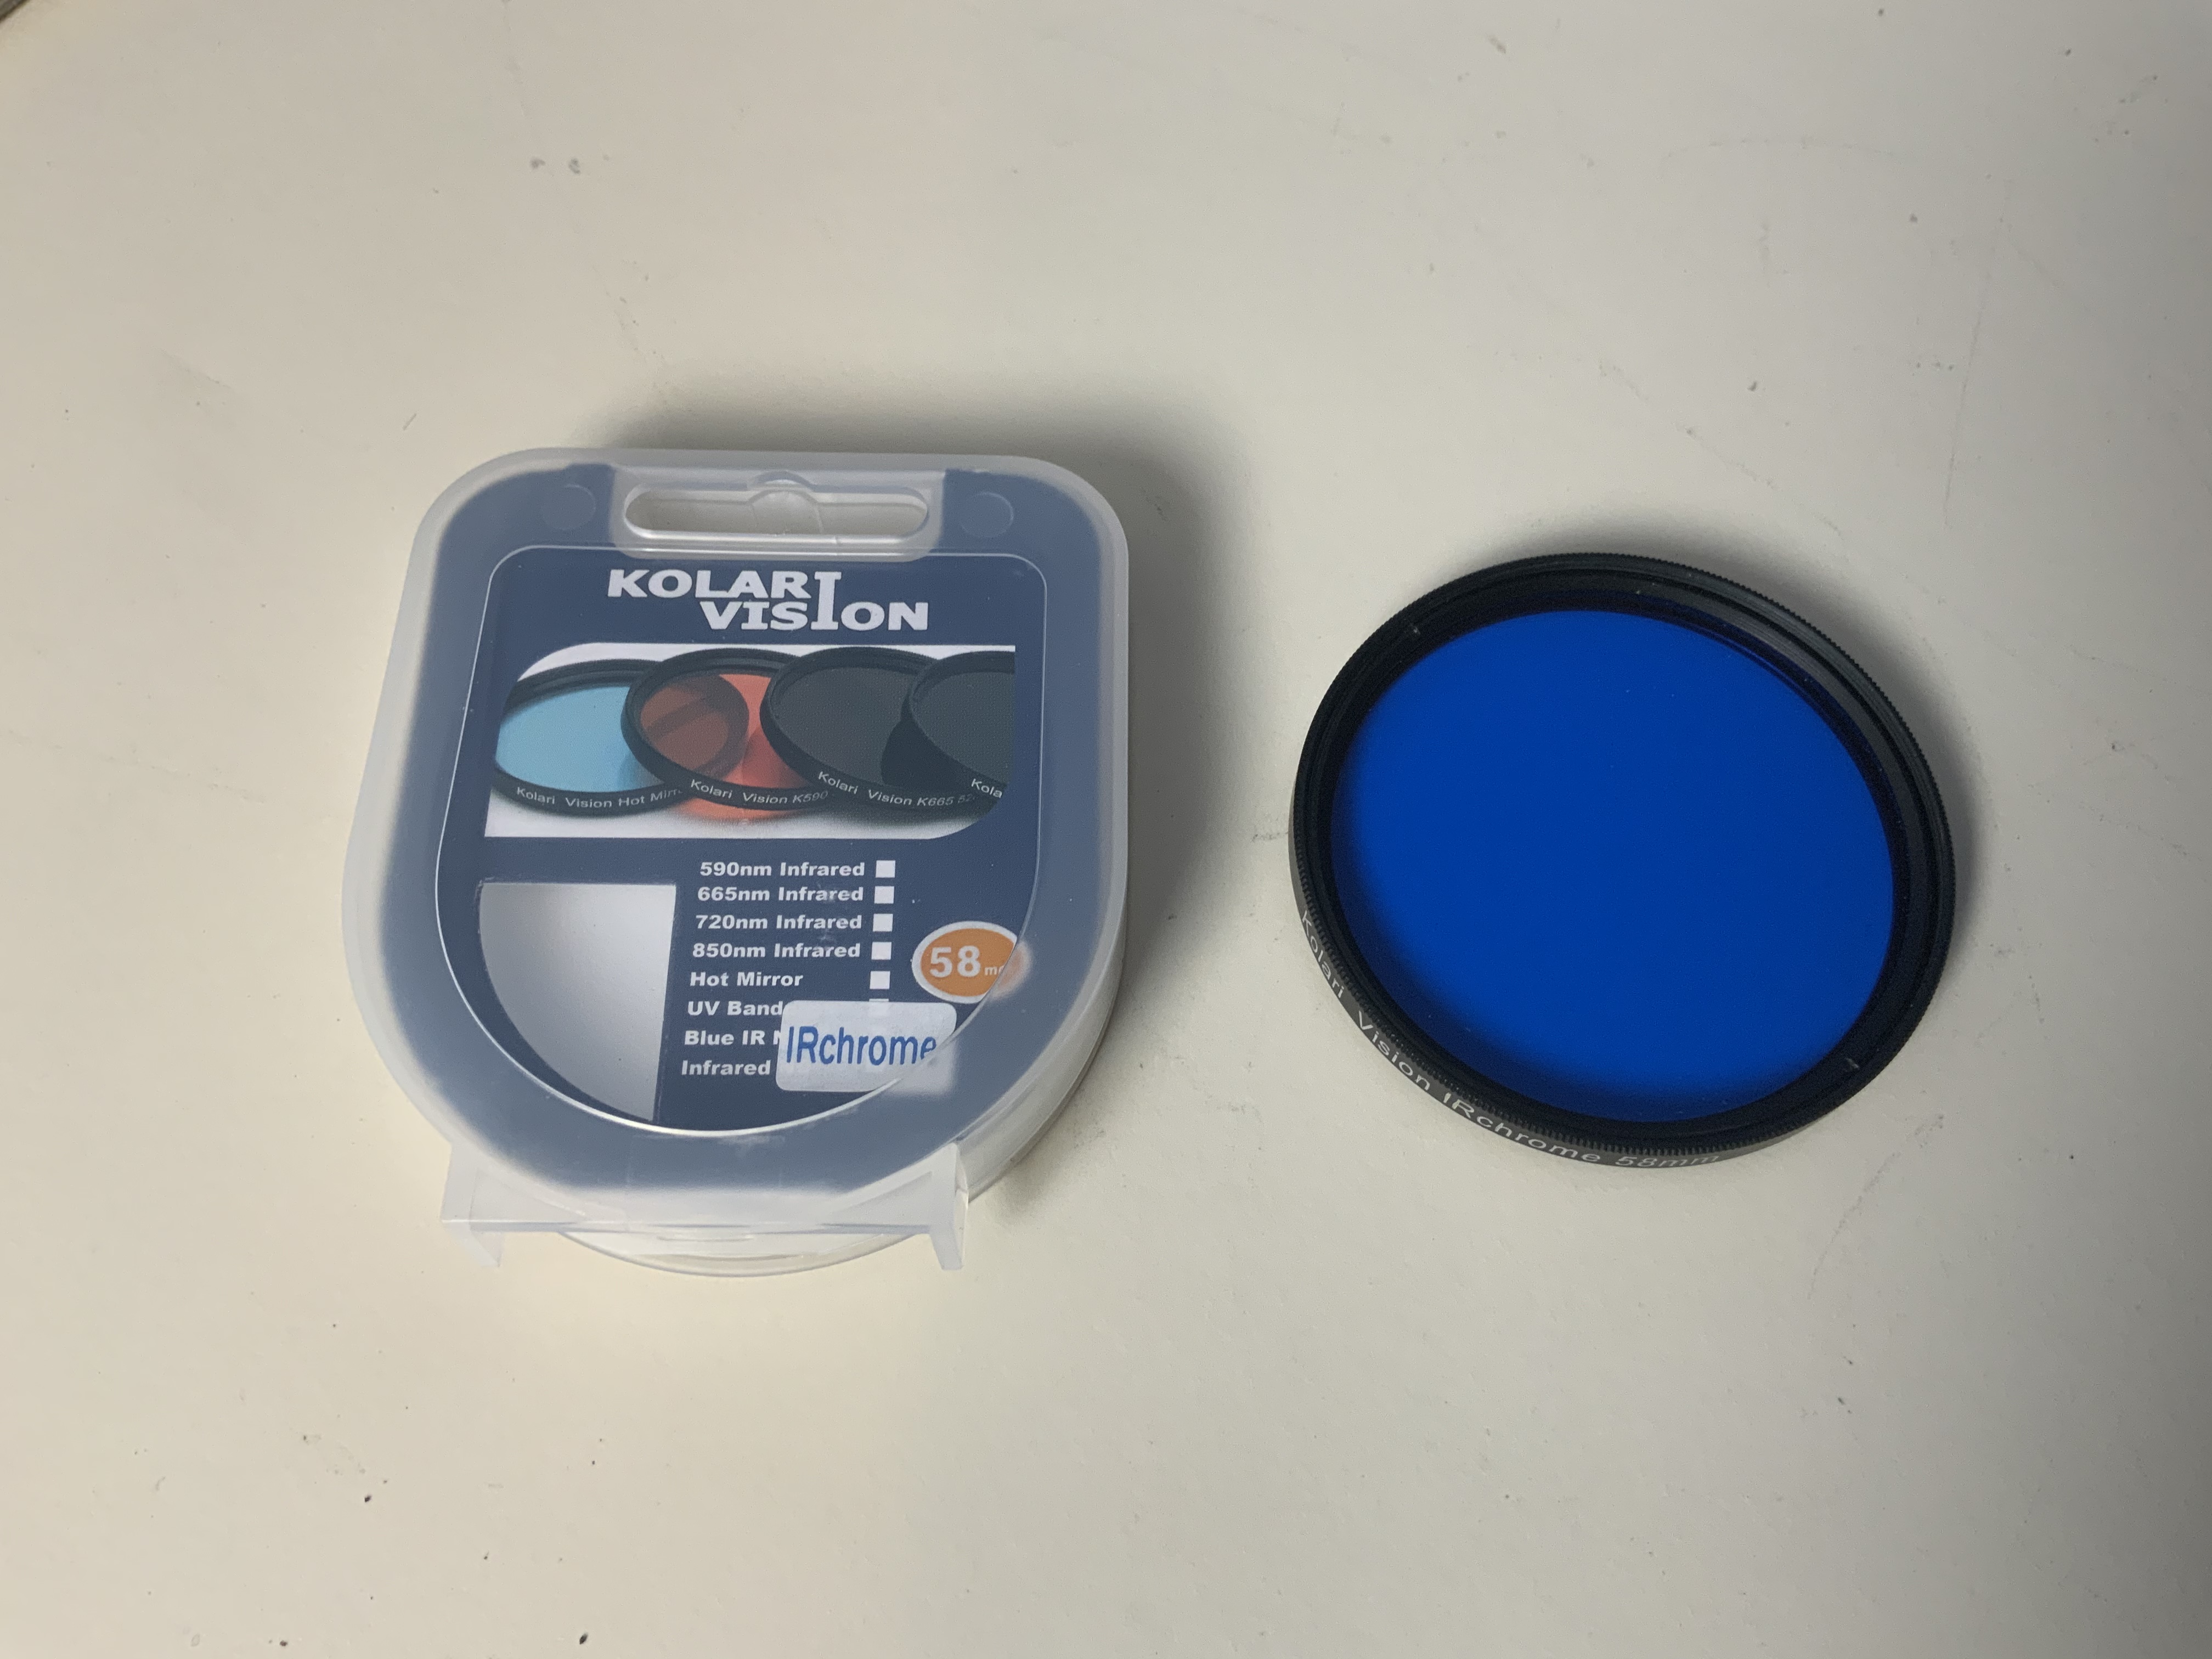 Kolari IR Chrome filter which gives off a blue tint